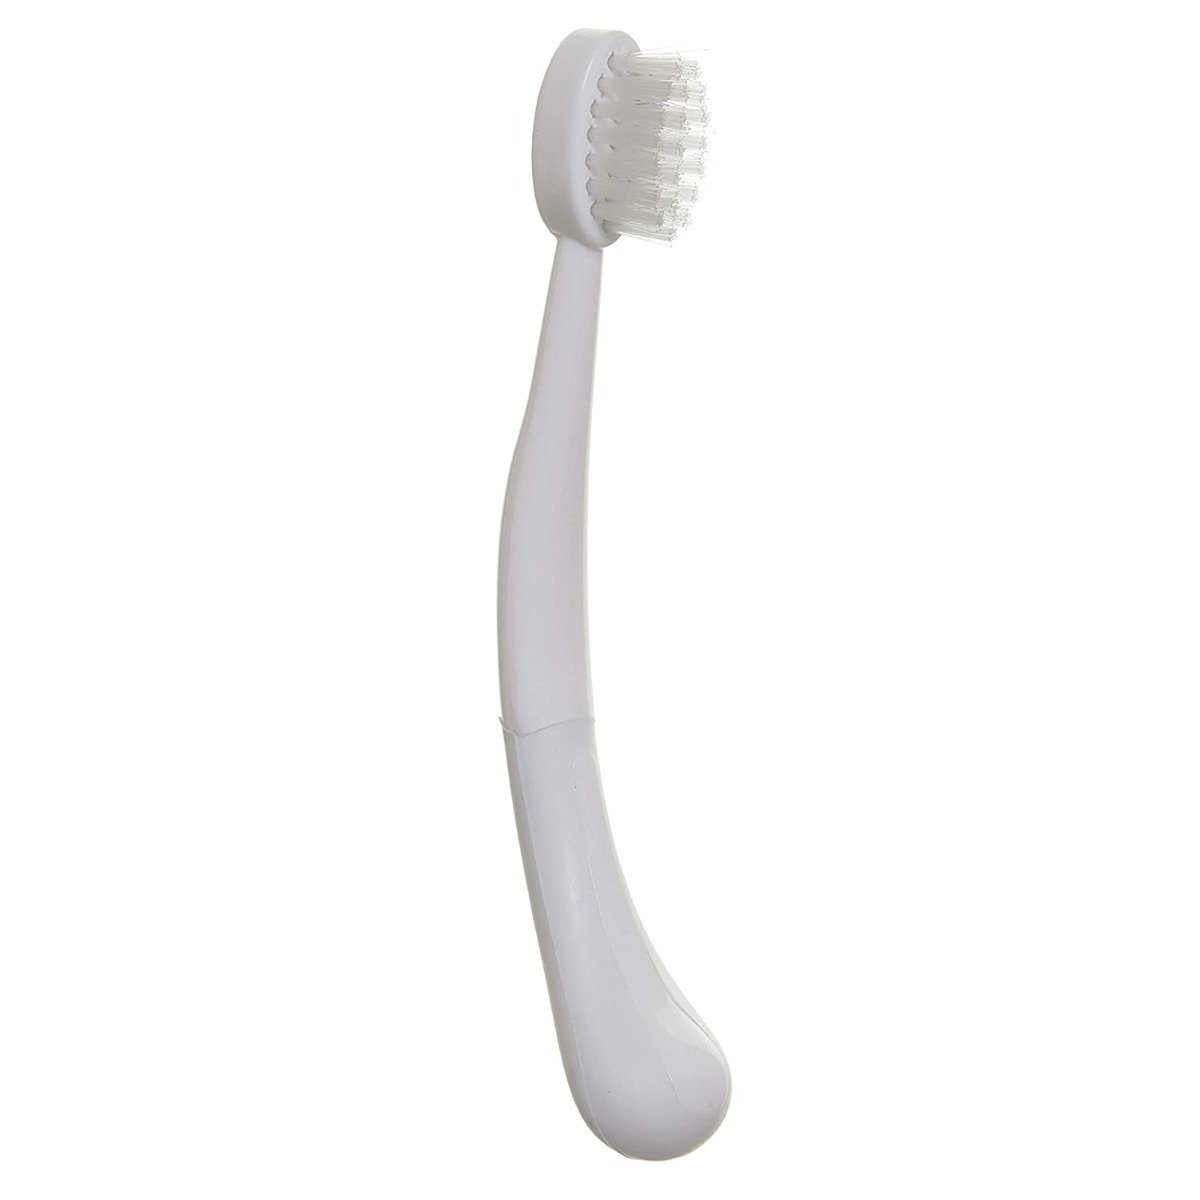 Dreambaby - White Toothbrush Set 3 Stage